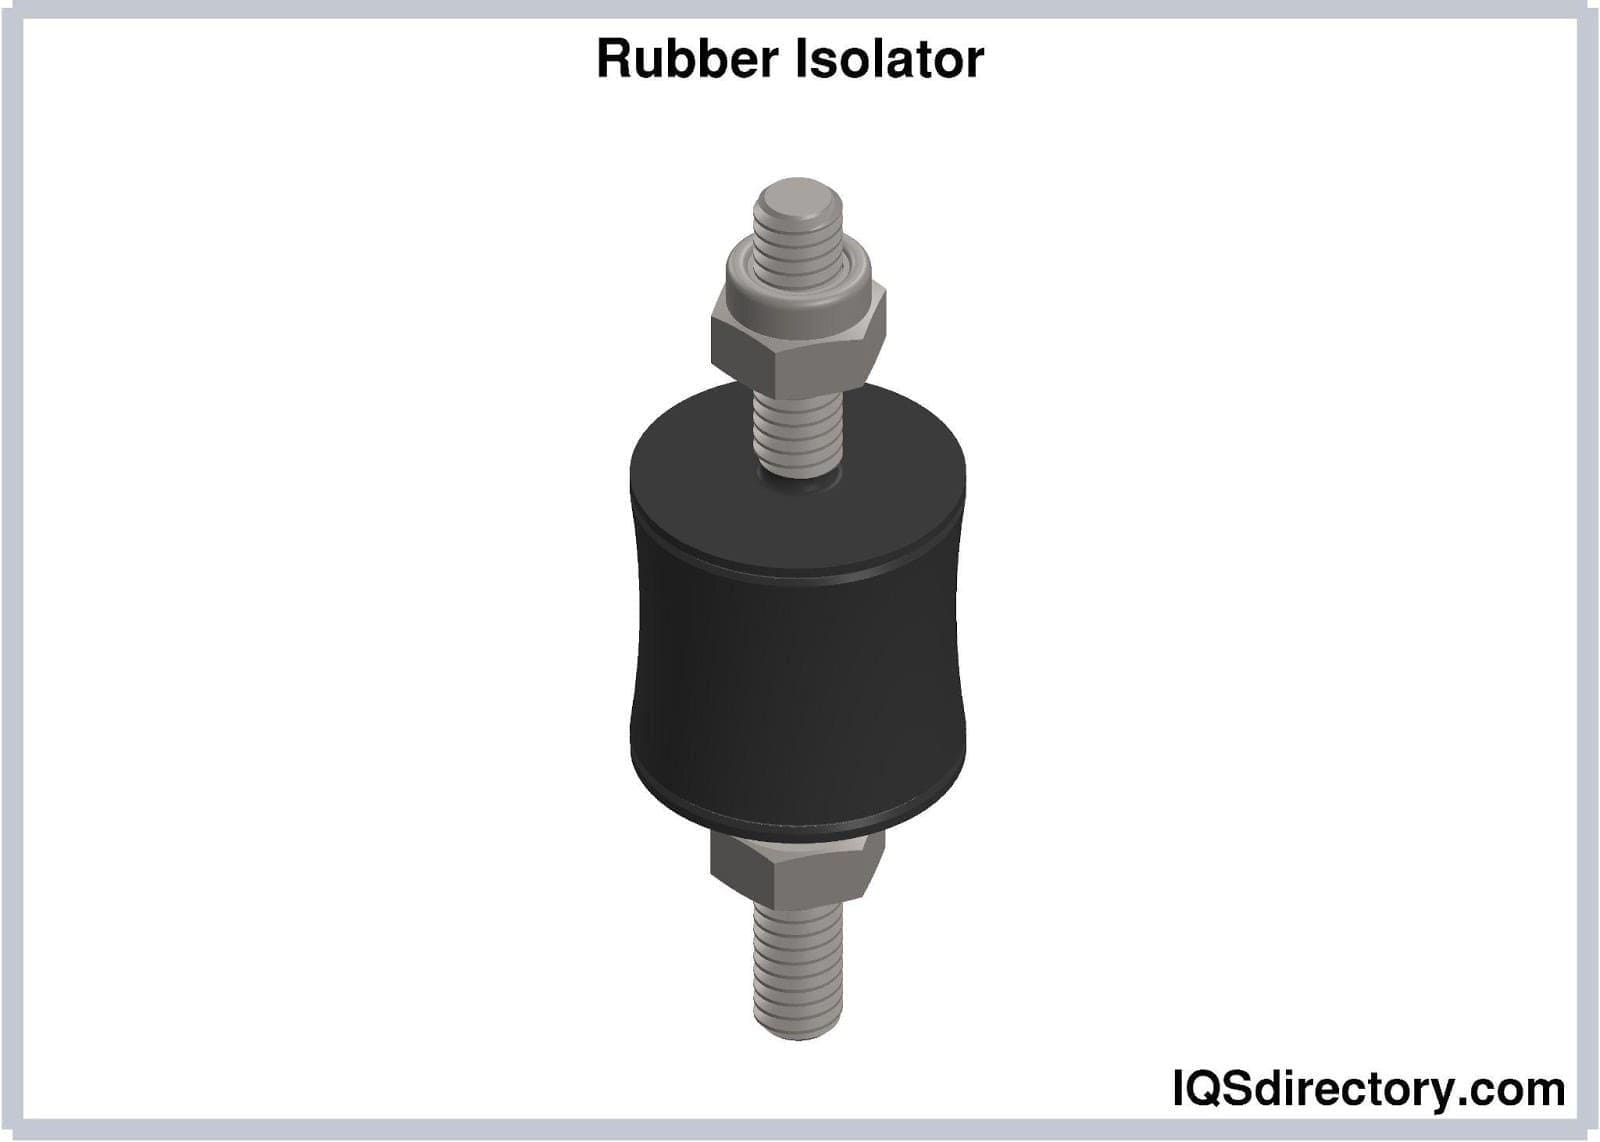 Rubber Isolator